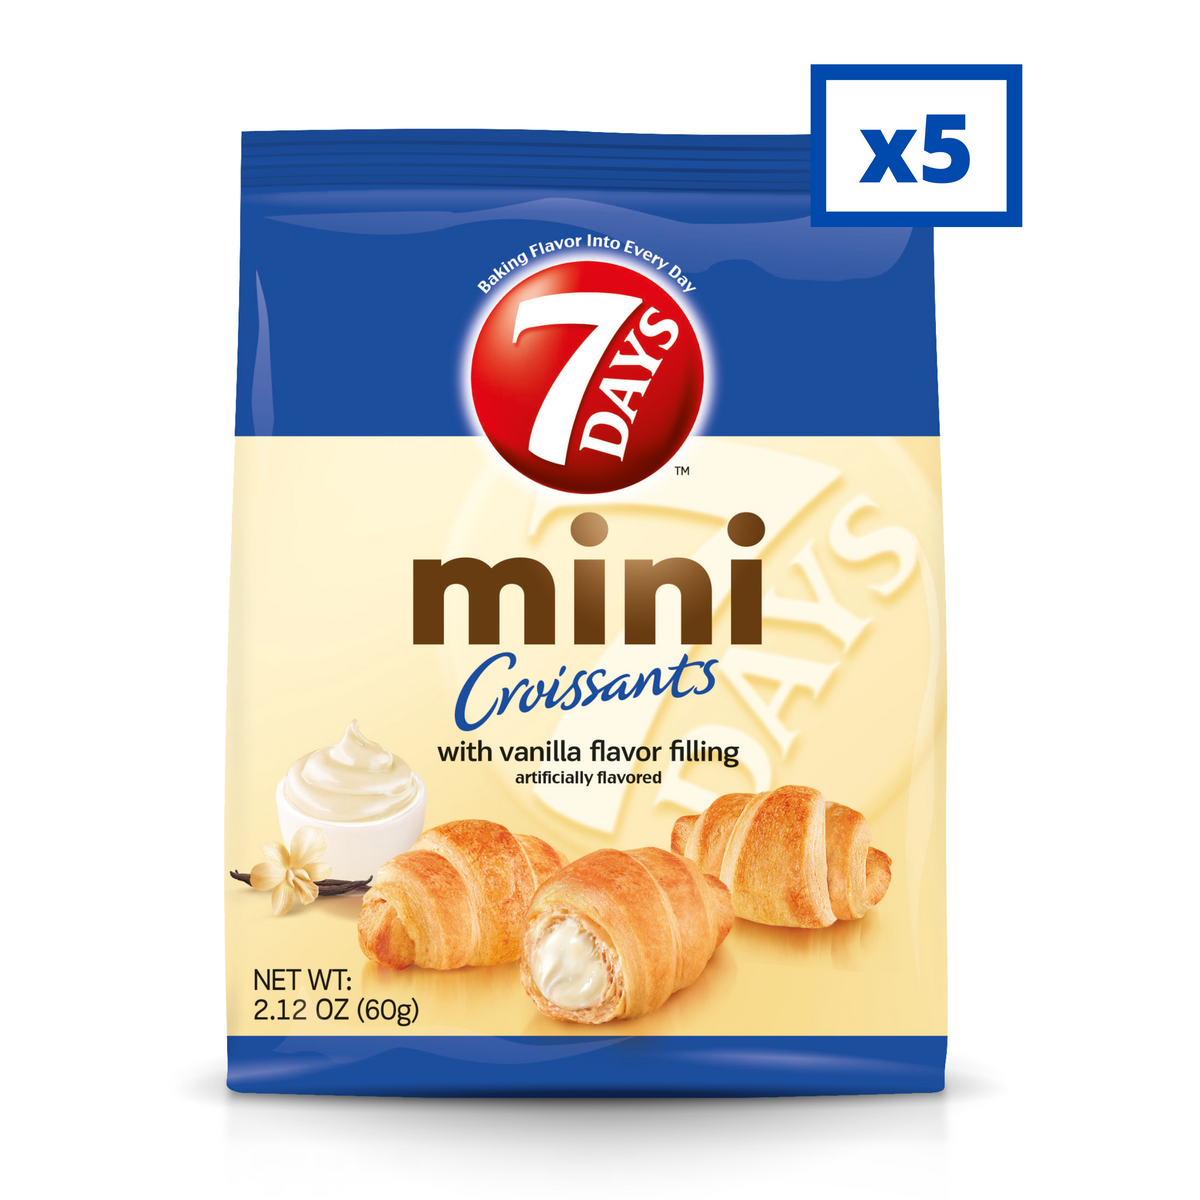 vanilla mini croissants times 5